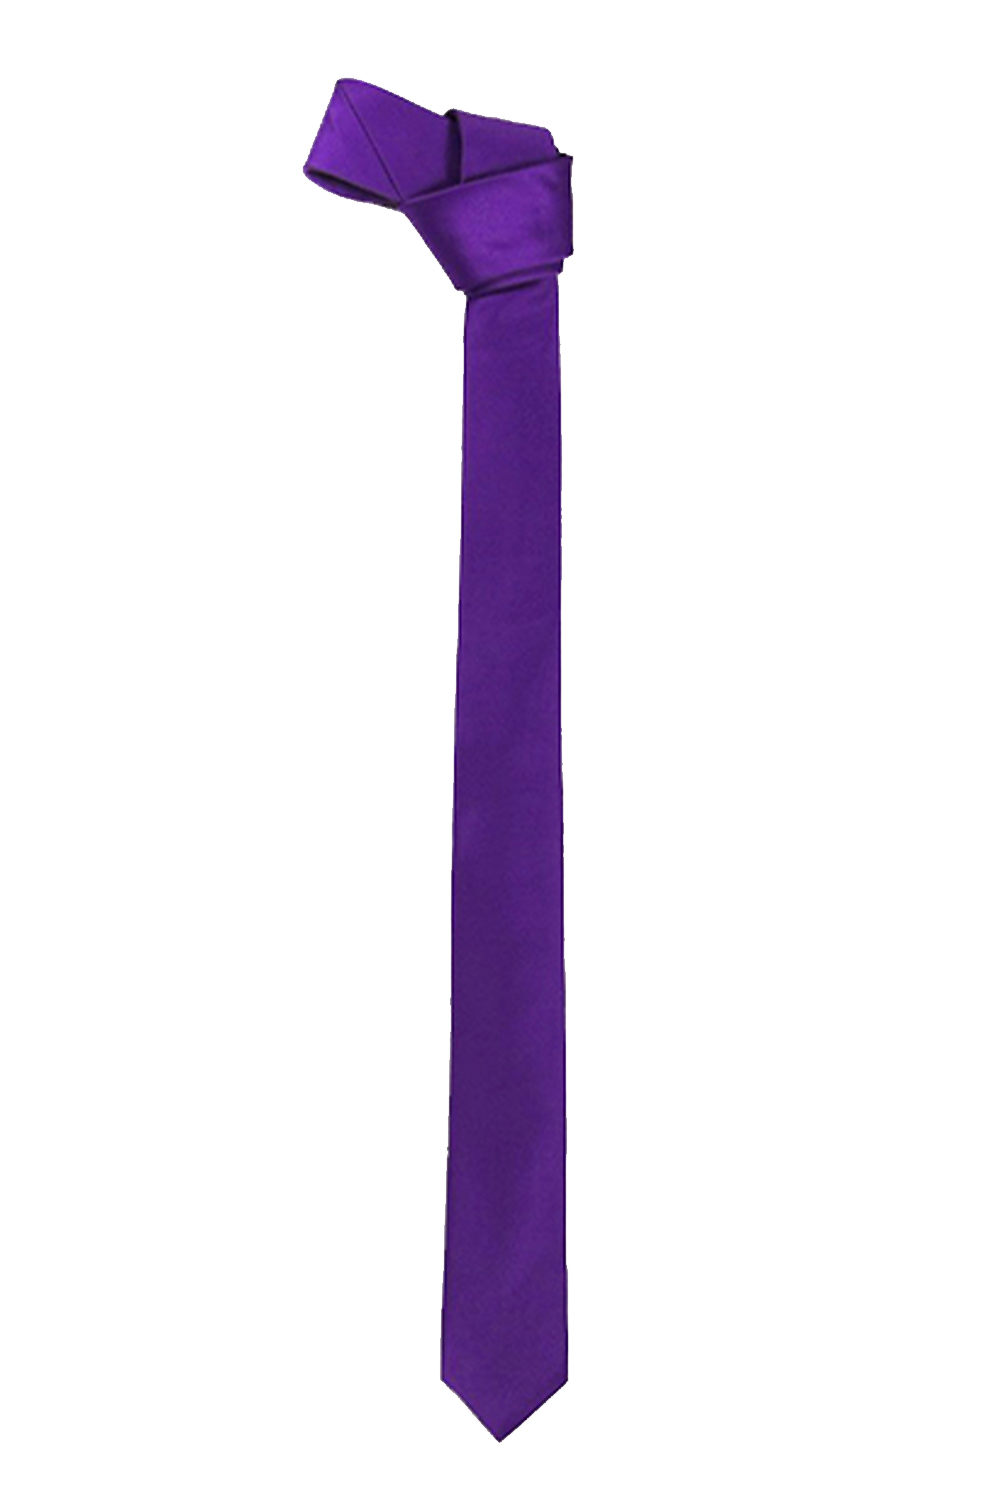 Satin Plain Purple Neck Tie